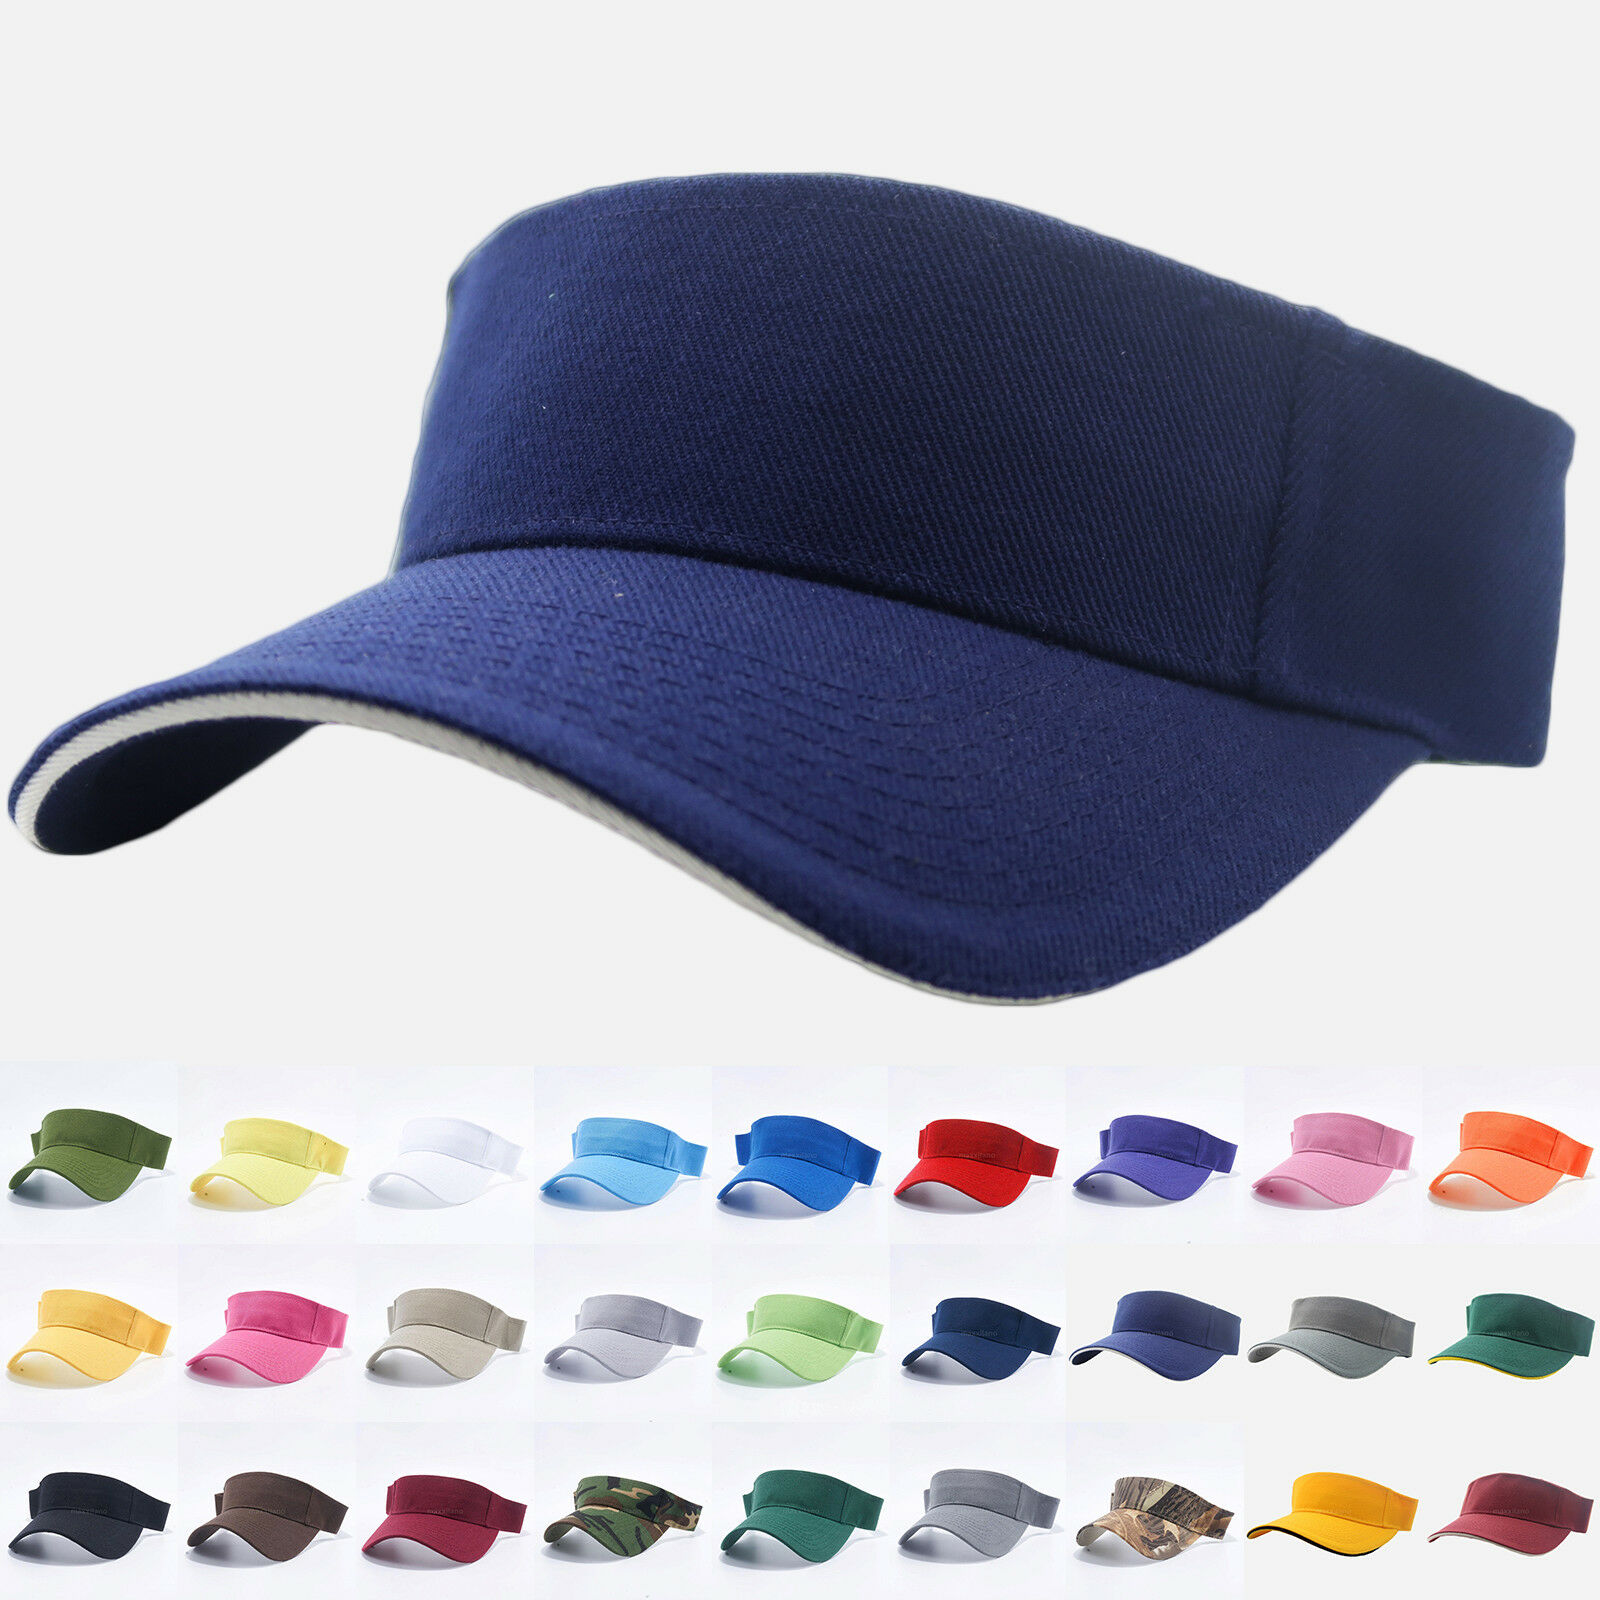 Visor Sun Hat Golf Tennis Beach Mens Cap Adjustable Summer Plain Colors Polo